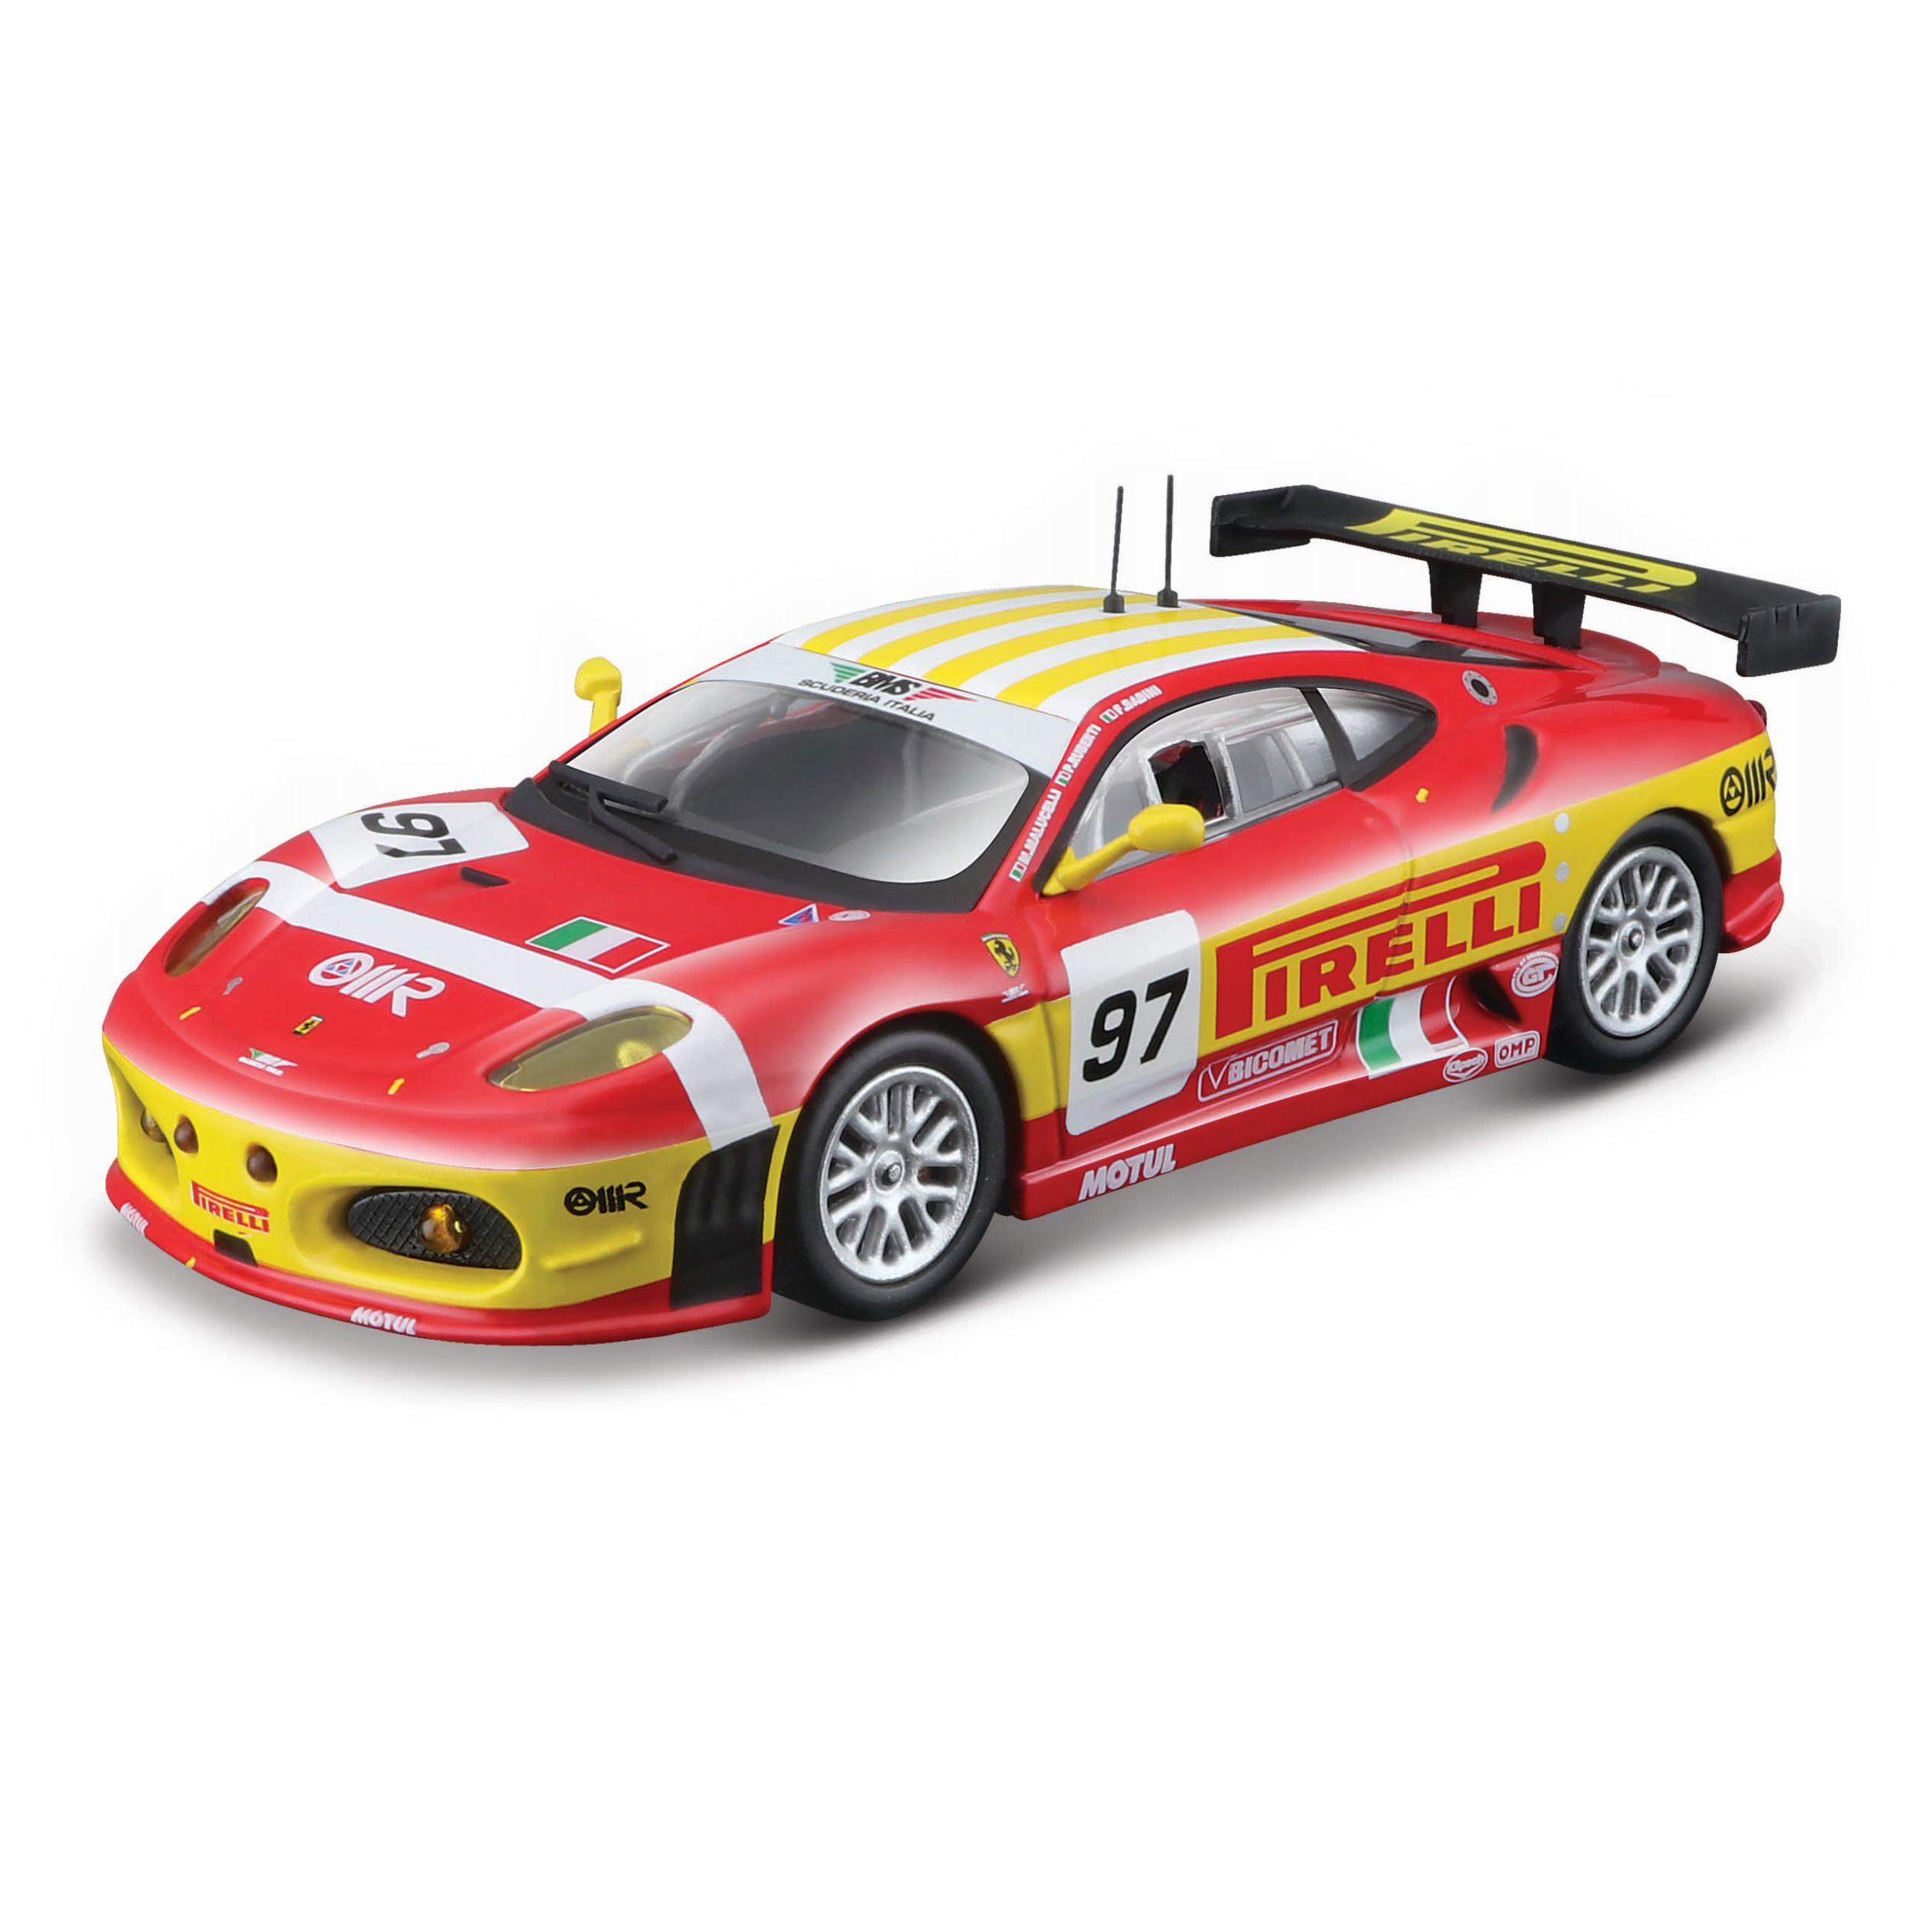 Коллекционная машинка Bburago Феррари 1:43 Ferrari Racing - F430 GTC 2008,красная bburago 1 18 ferrari 70th anniversary ferrari sf70h 2017 f1 racing model alloy car model collect gifts toy